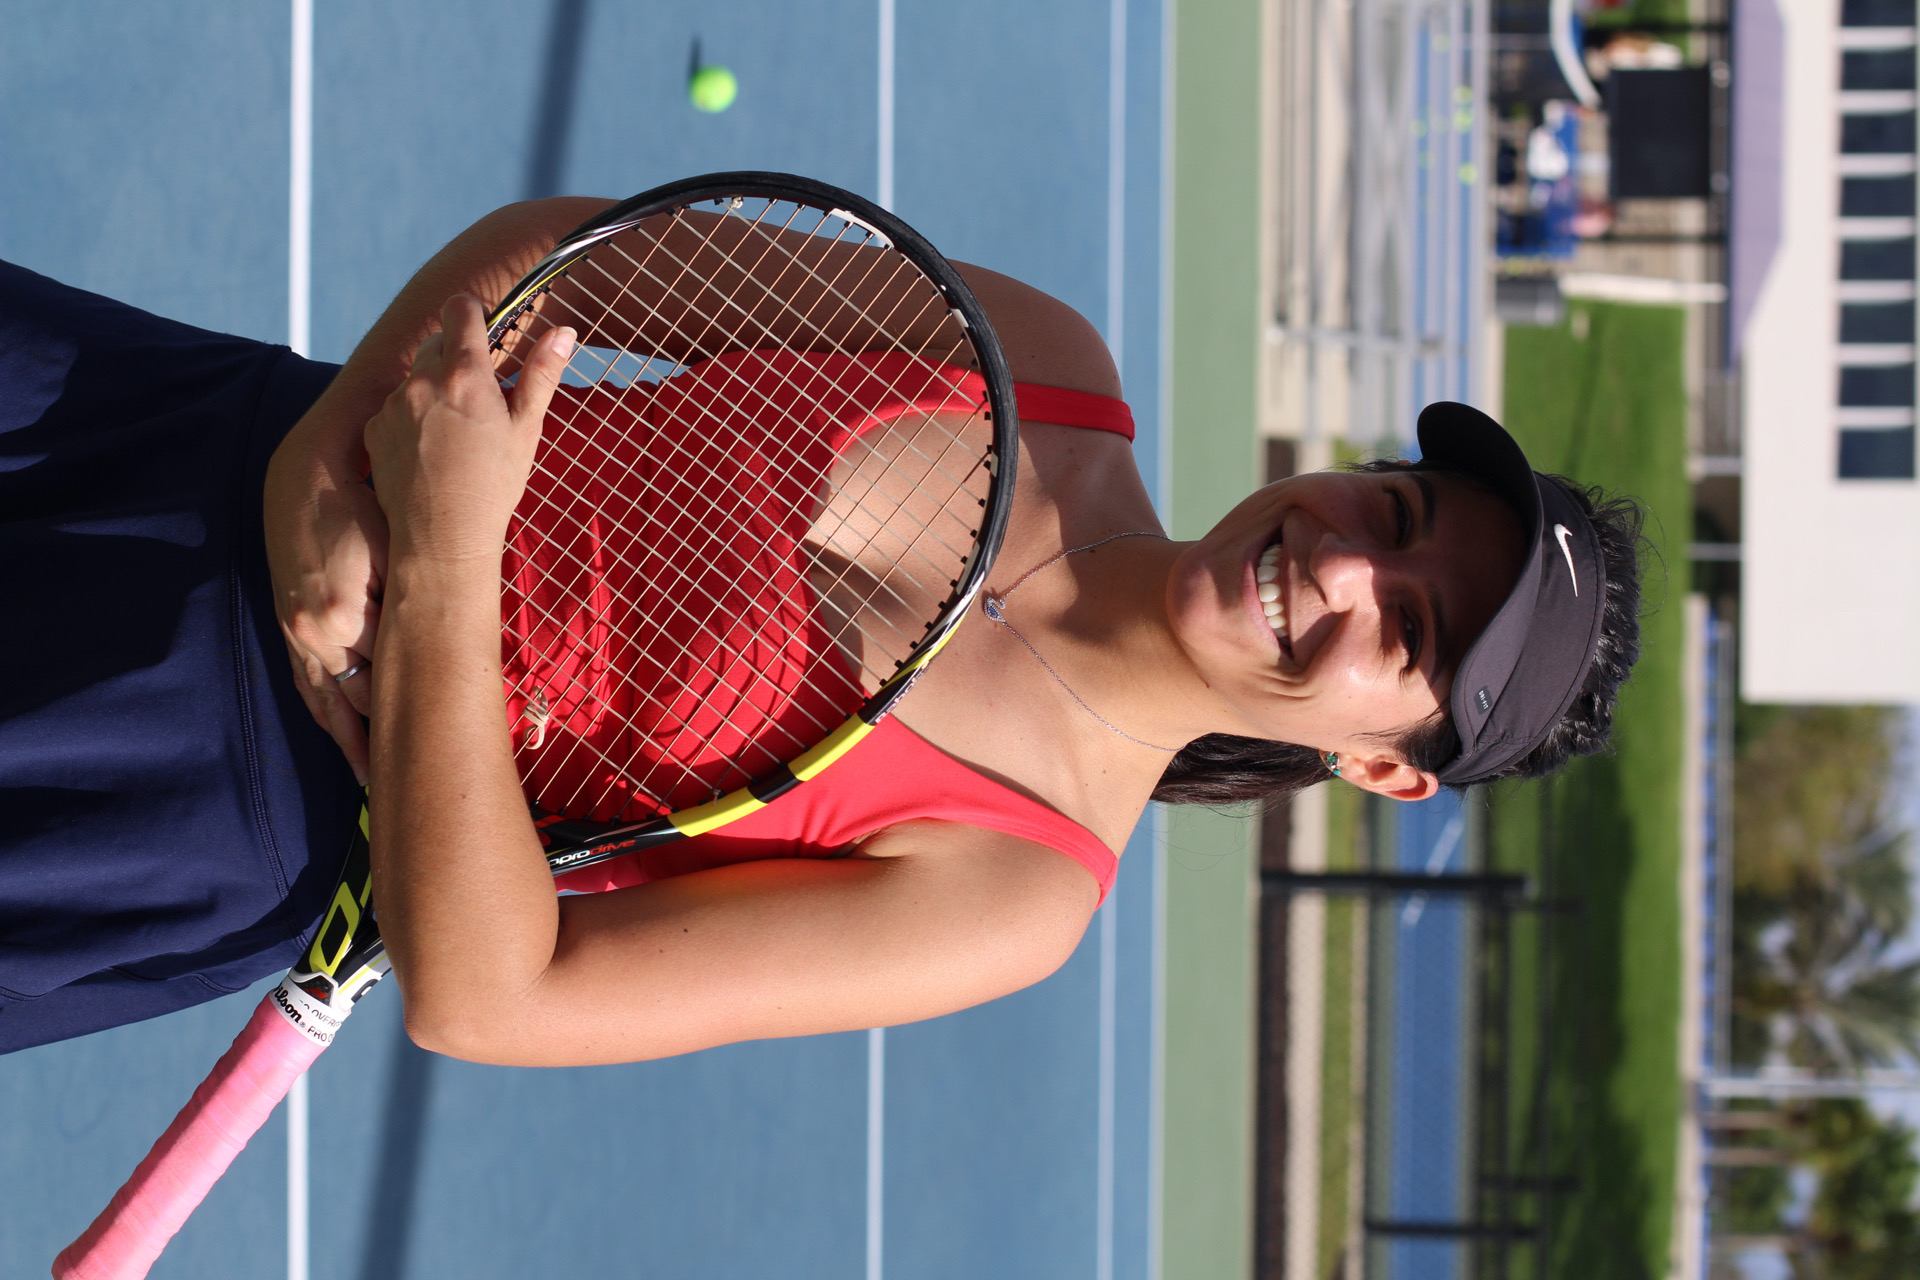 Paulina D. teaches tennis lessons in Raleigh, NC